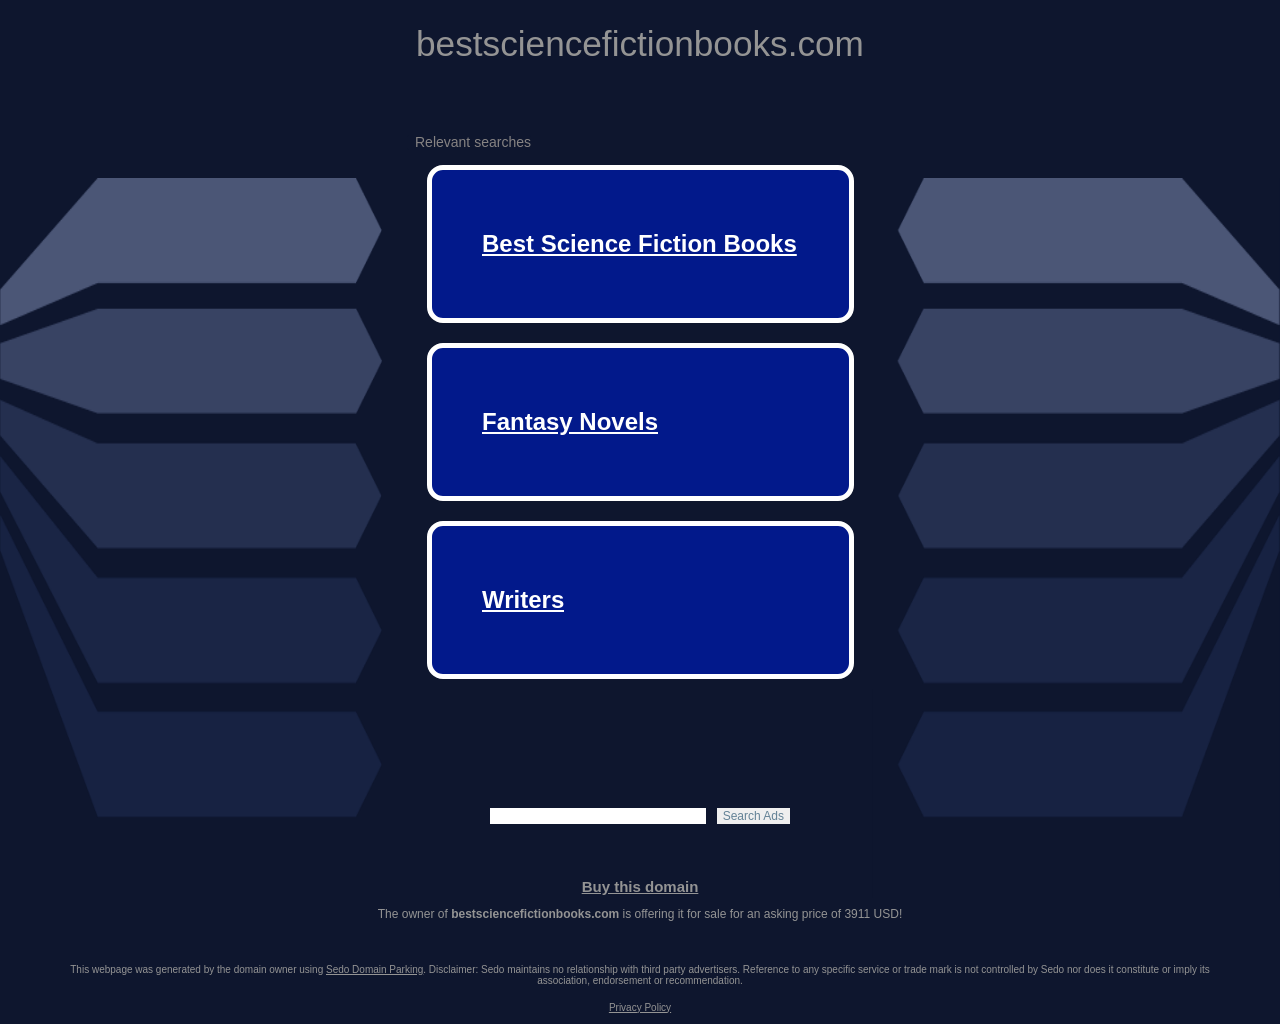 bestsciencefictionbooks.com